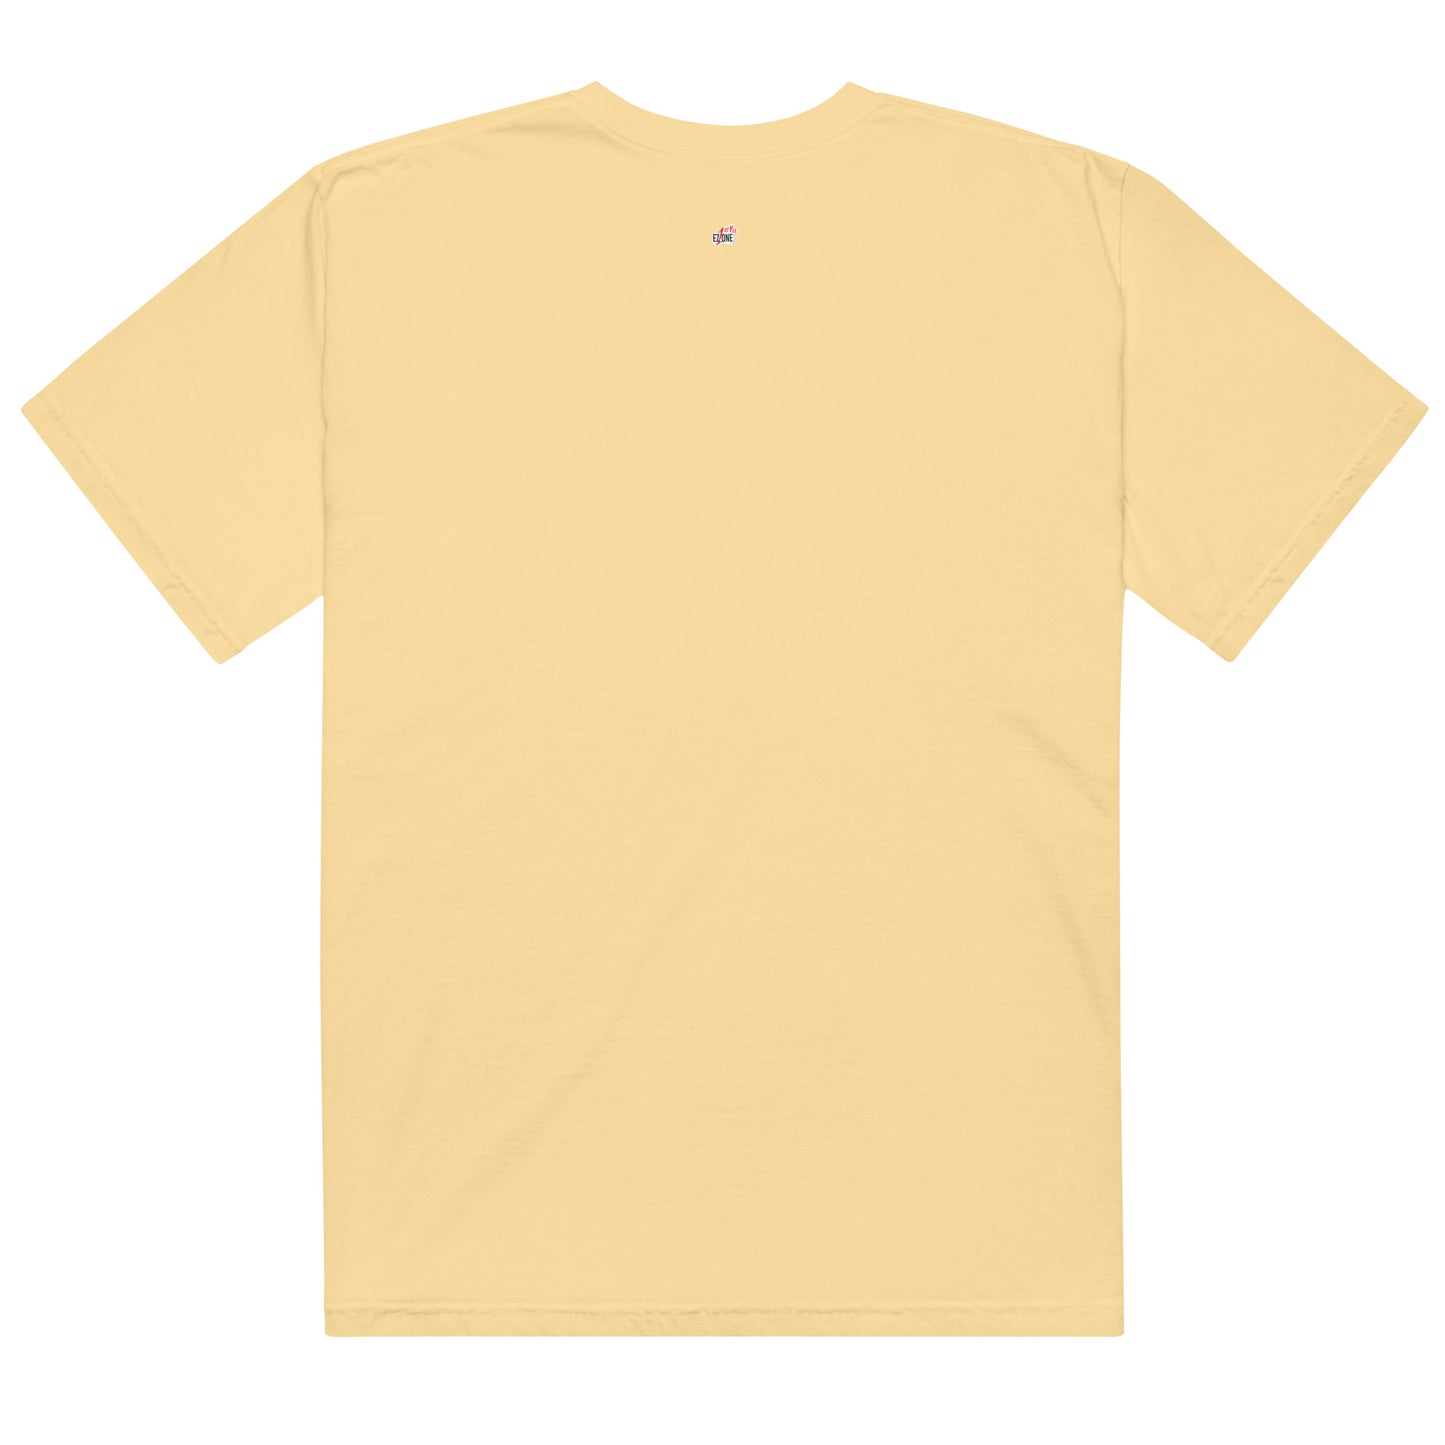 Mother's Day - Men’s garment-dyed heavyweight t-shirt